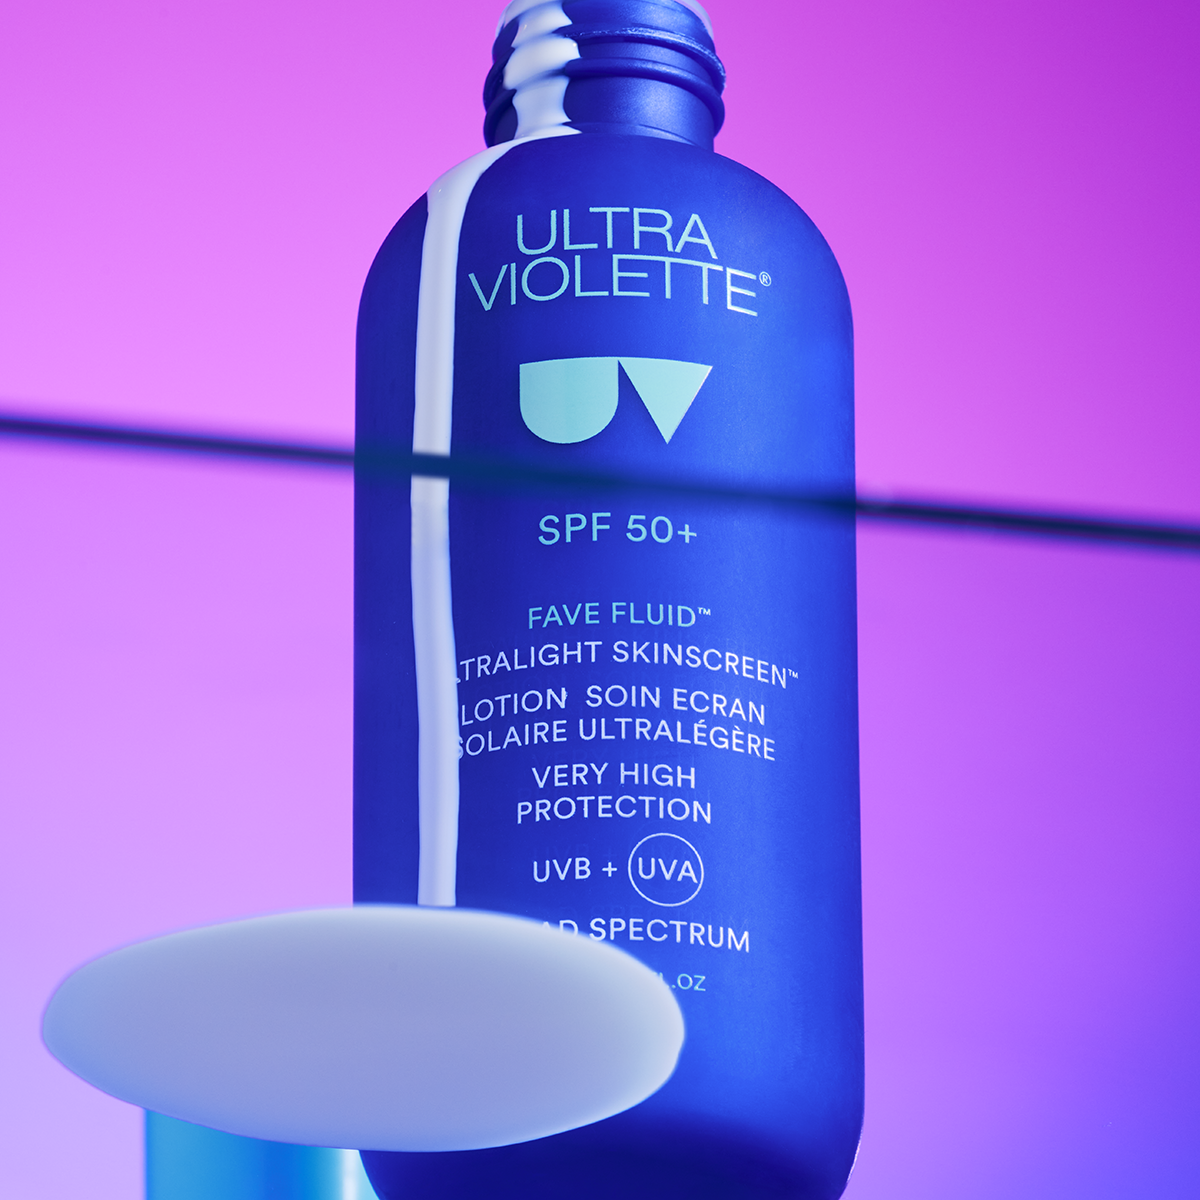 Ultra Violette - Fave Fluid SPF 50 Lightweight